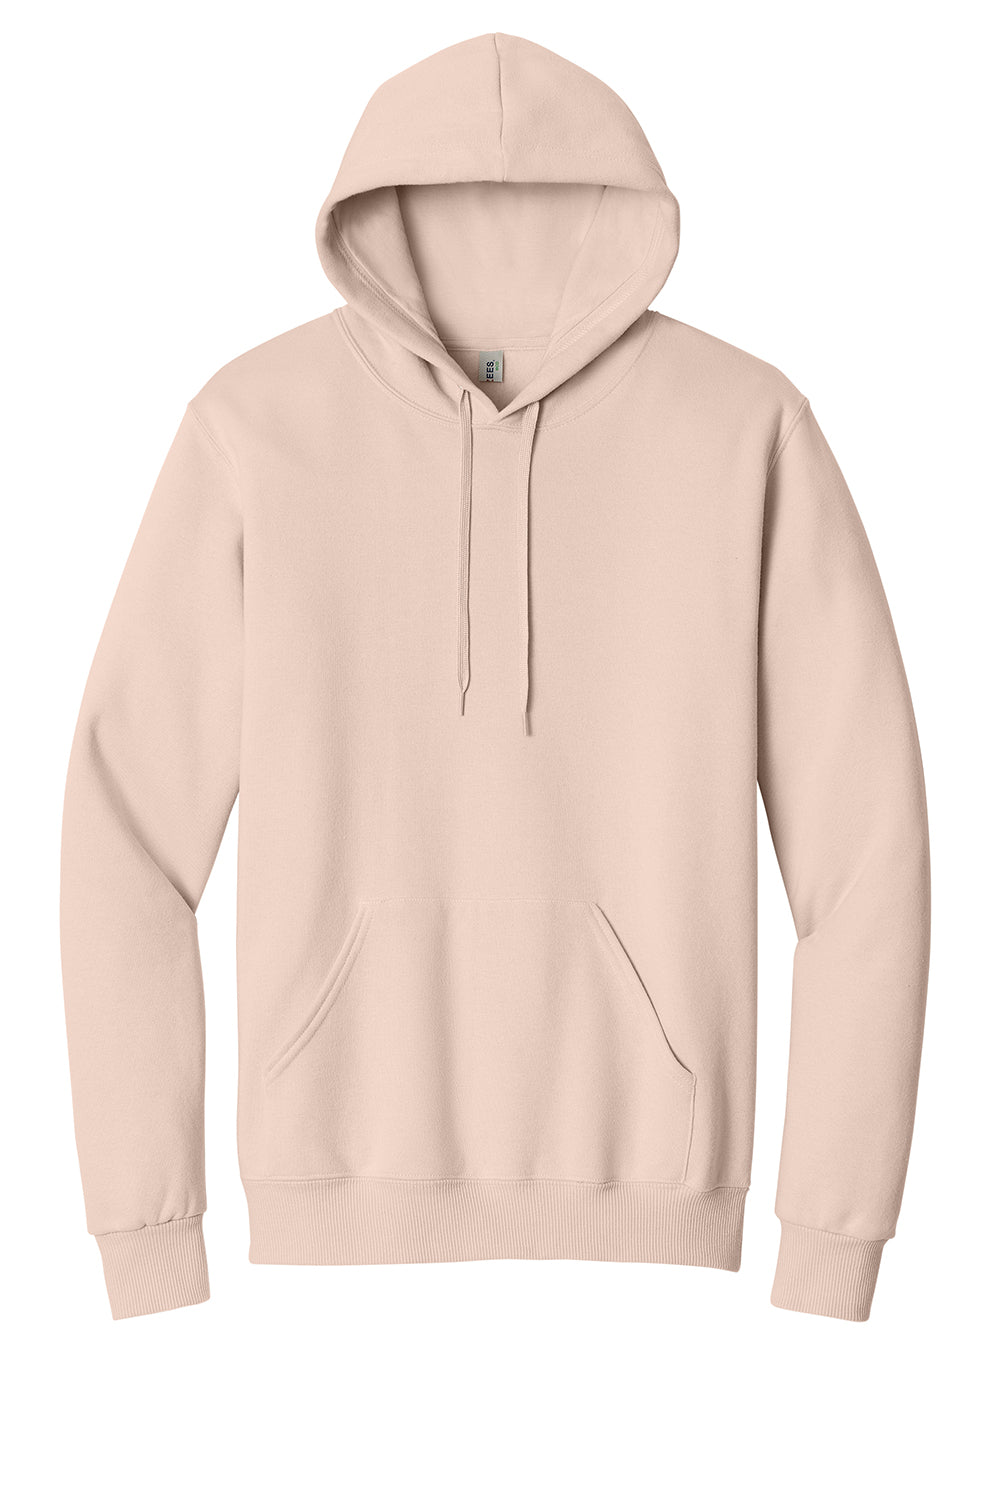 Jerzees 700M Mens Eco Premium Hooded Sweatshirt Hoodie Blush Pink Flat Front